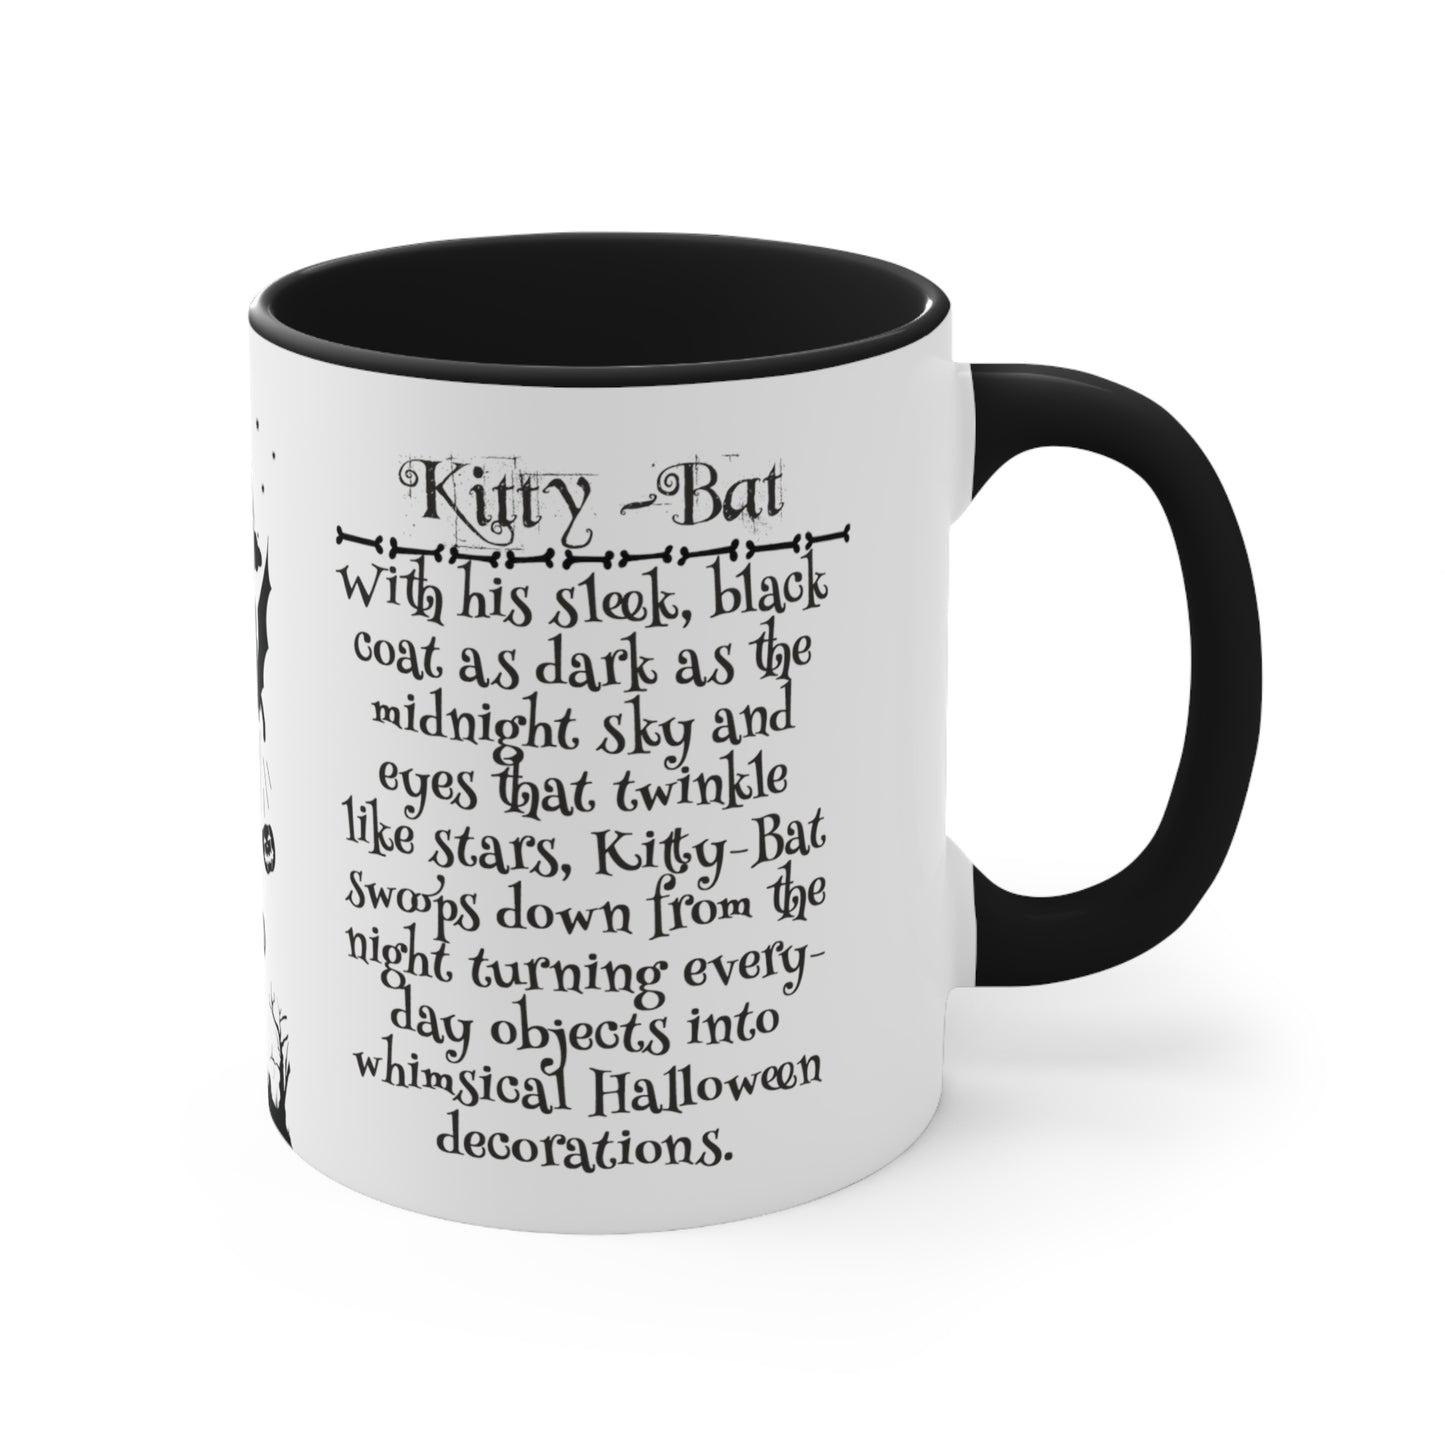 Kitty-Bat™ Collectible Halloween Gift Mug